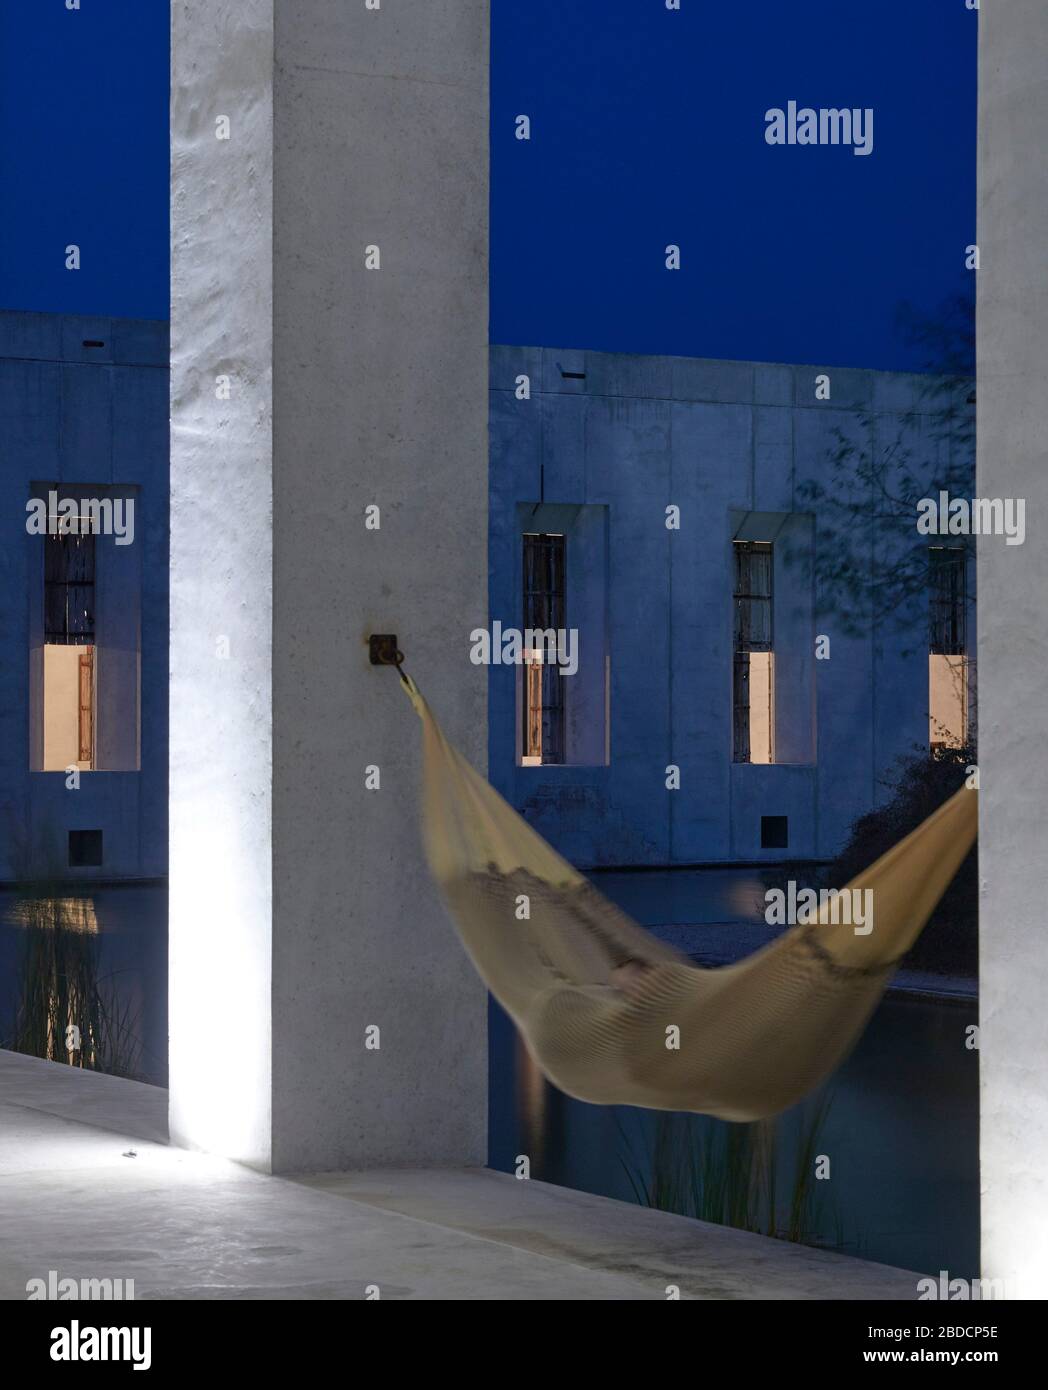 Hammock in colonnade. Plantel Matilde, Yucatan, Mexico. Architect: Javier Marín and Arcadio Marín, 2020. Stock Photo